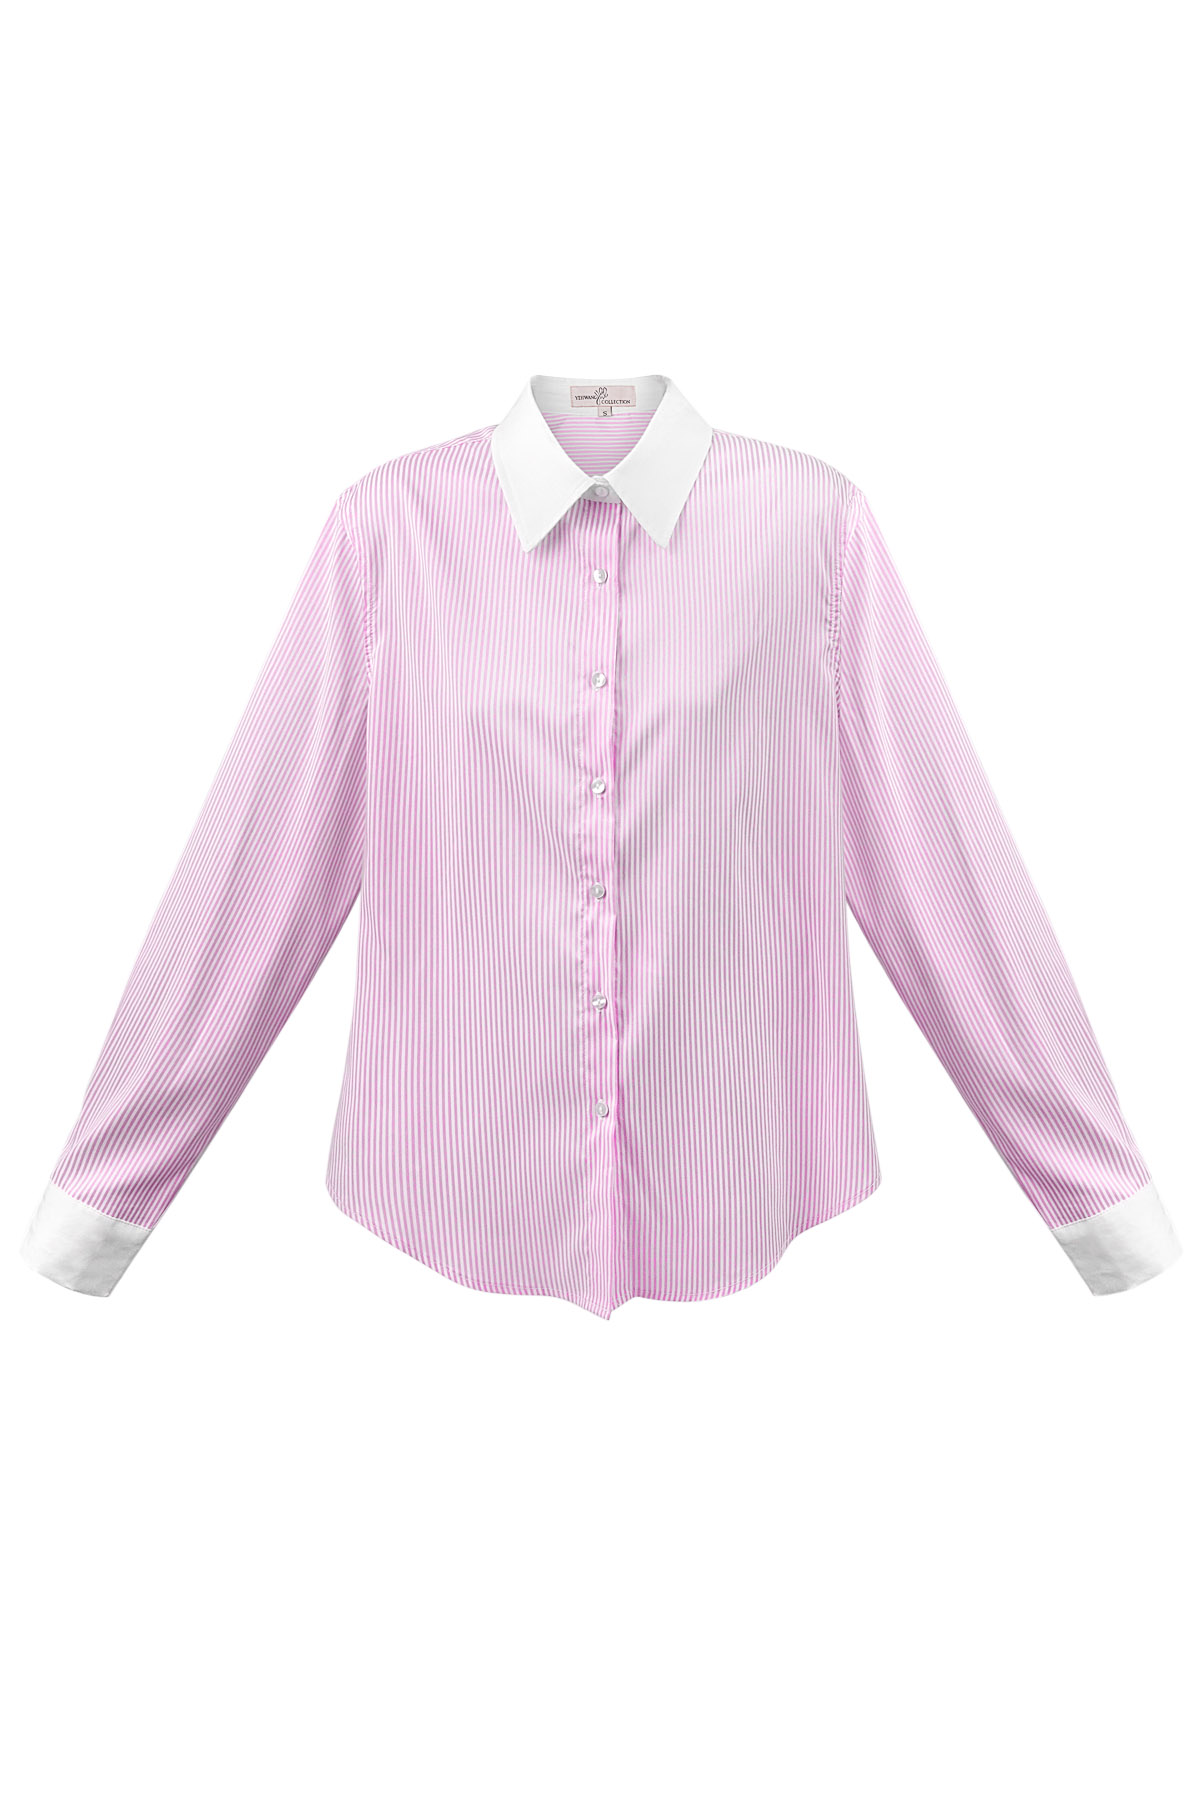 Basic blouse stripes - white/pink h5 